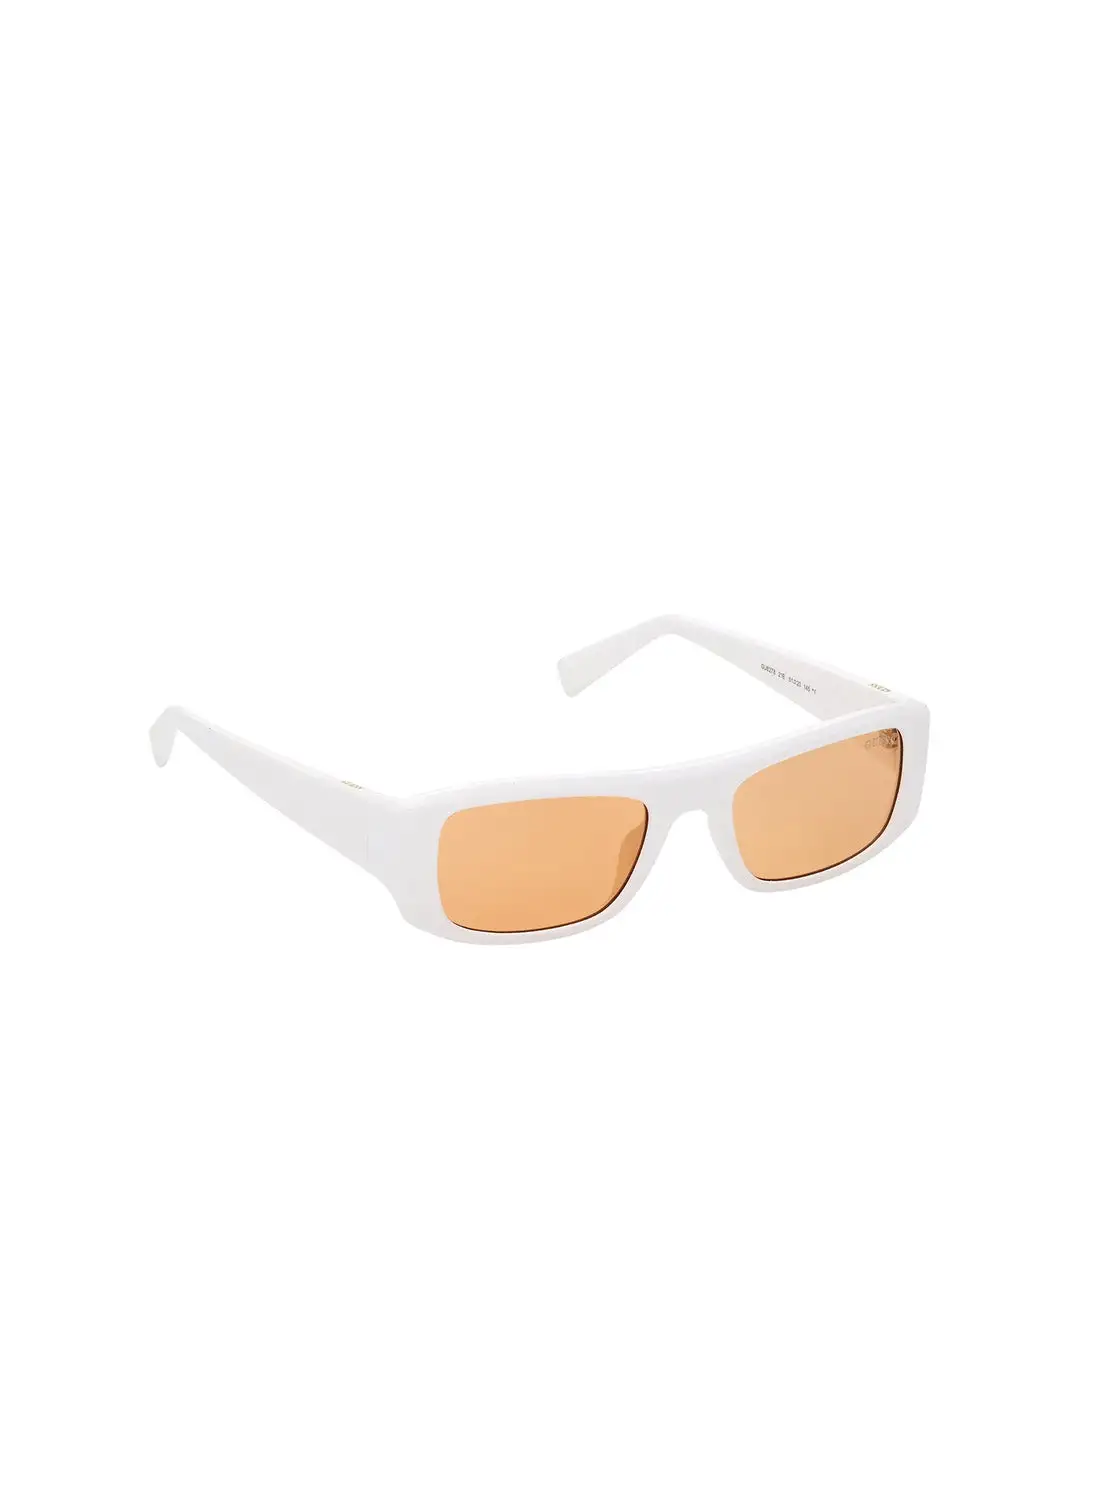 GUESS Unisex UV Protection Rectangular Sunglasses - GU827821E51 - Lens Size: 51 Mm